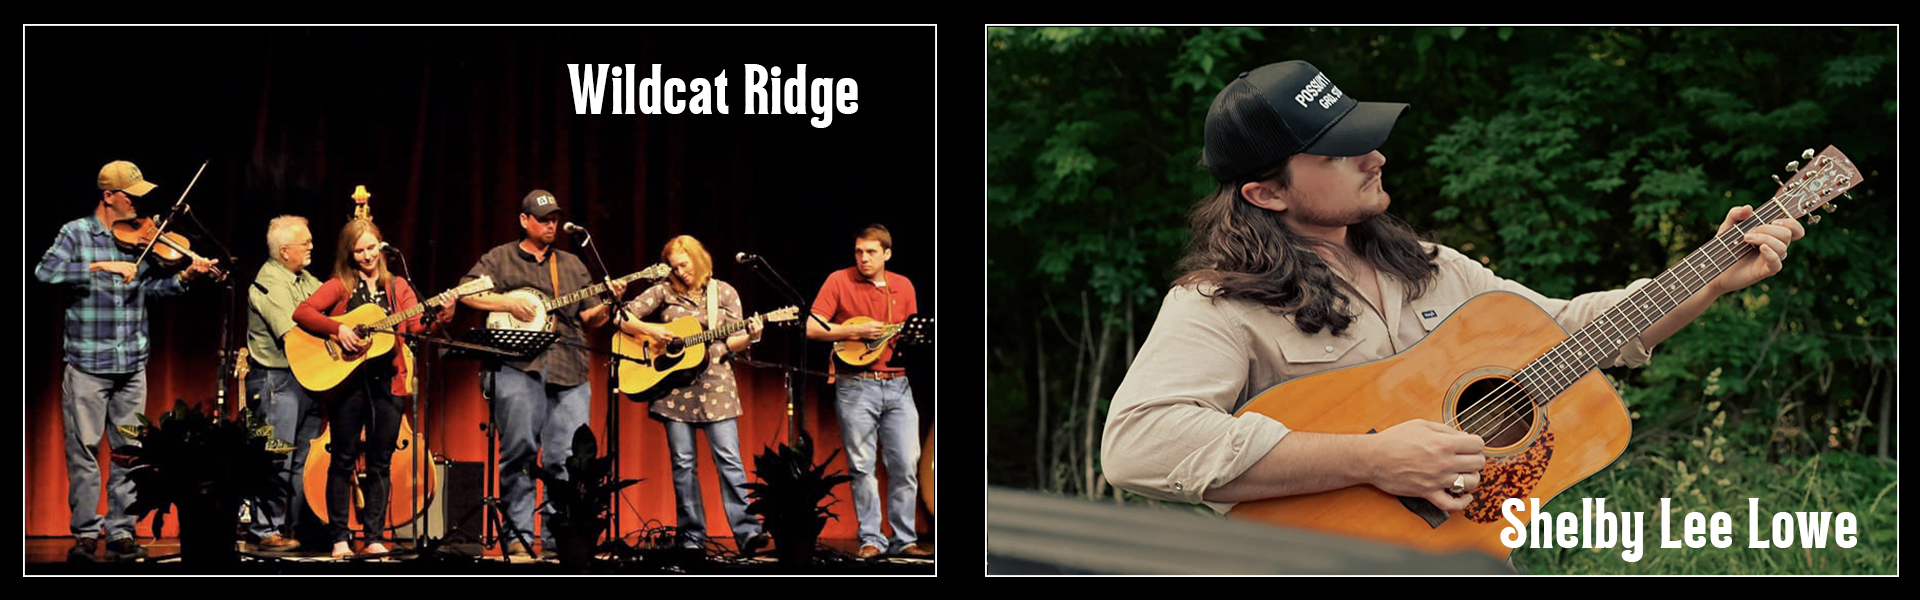 Wildcat Ridge and Shelby Lee Lowe